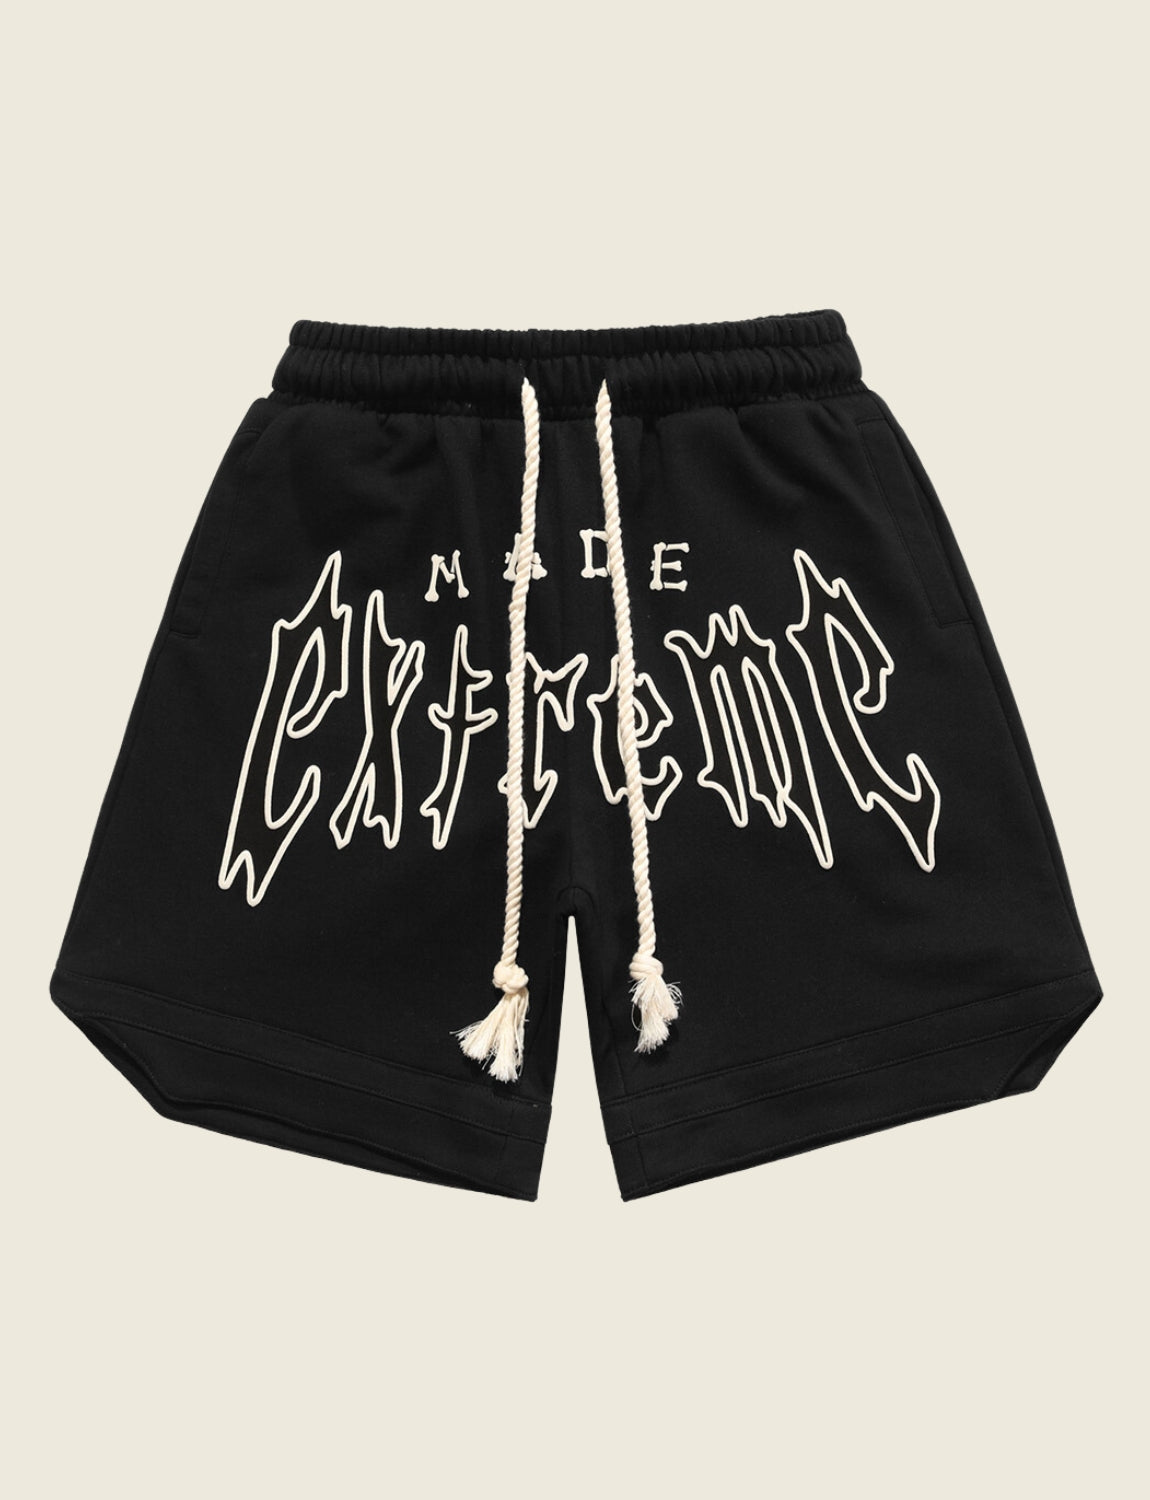 FSW® "Extreme" Fresh Shorts